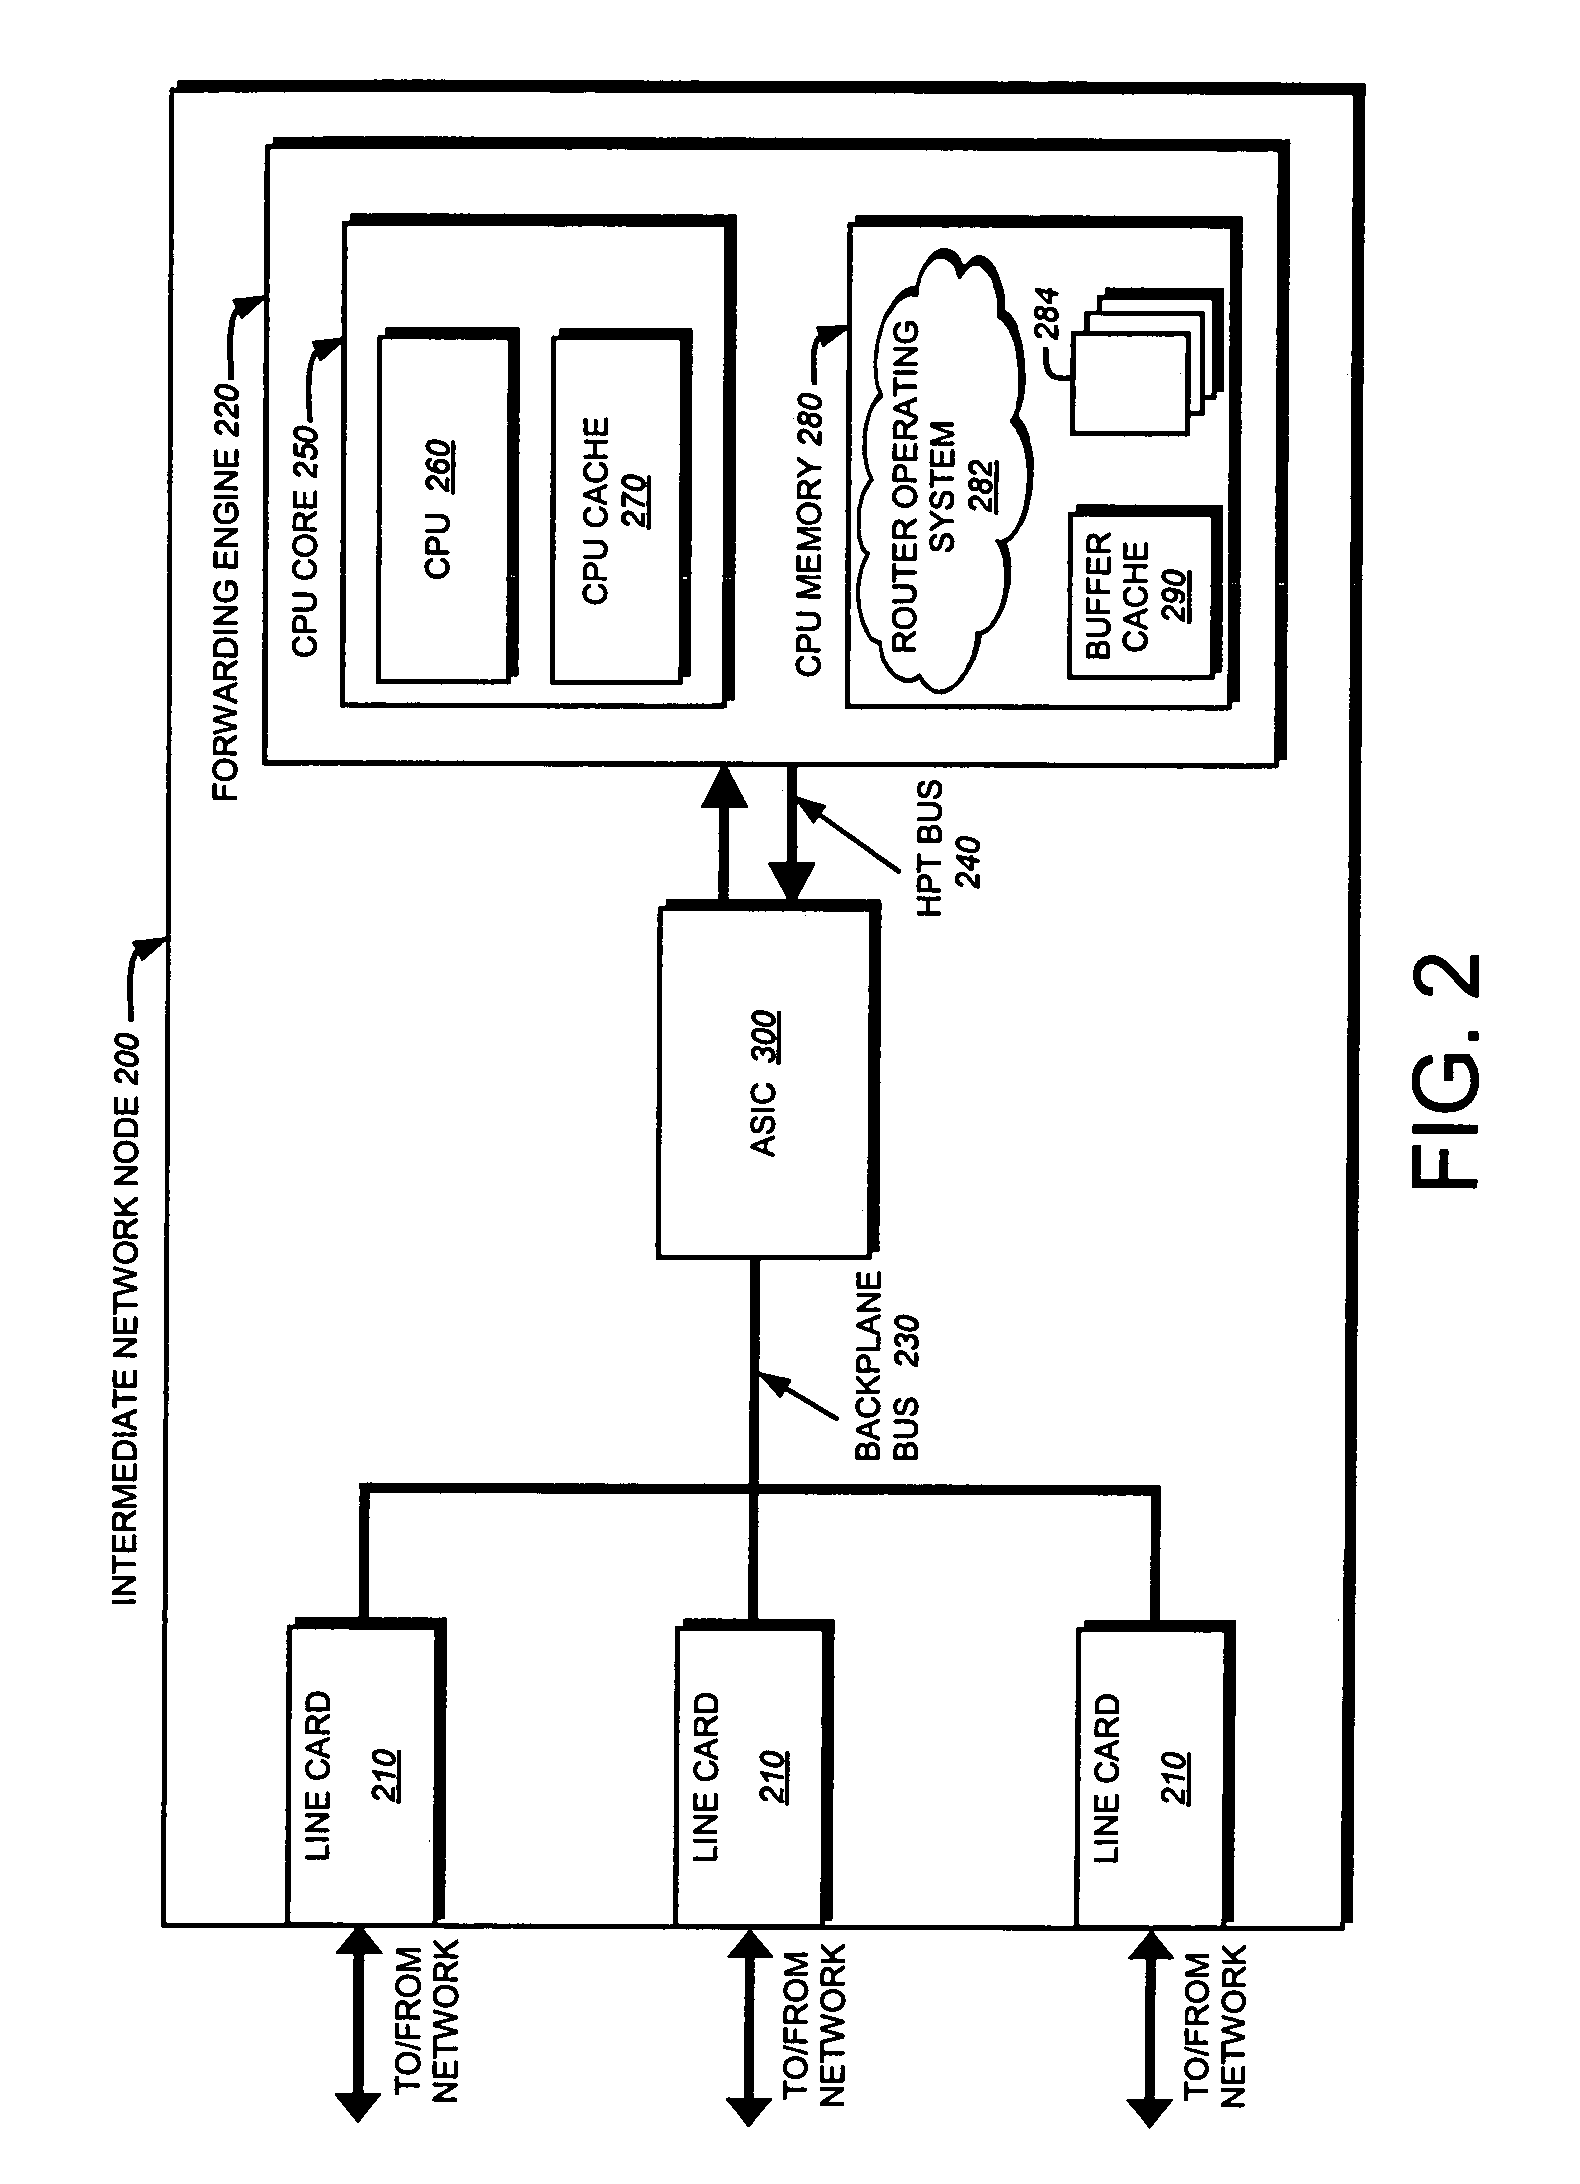 Buffer management technique for a hypertransport data path protocol